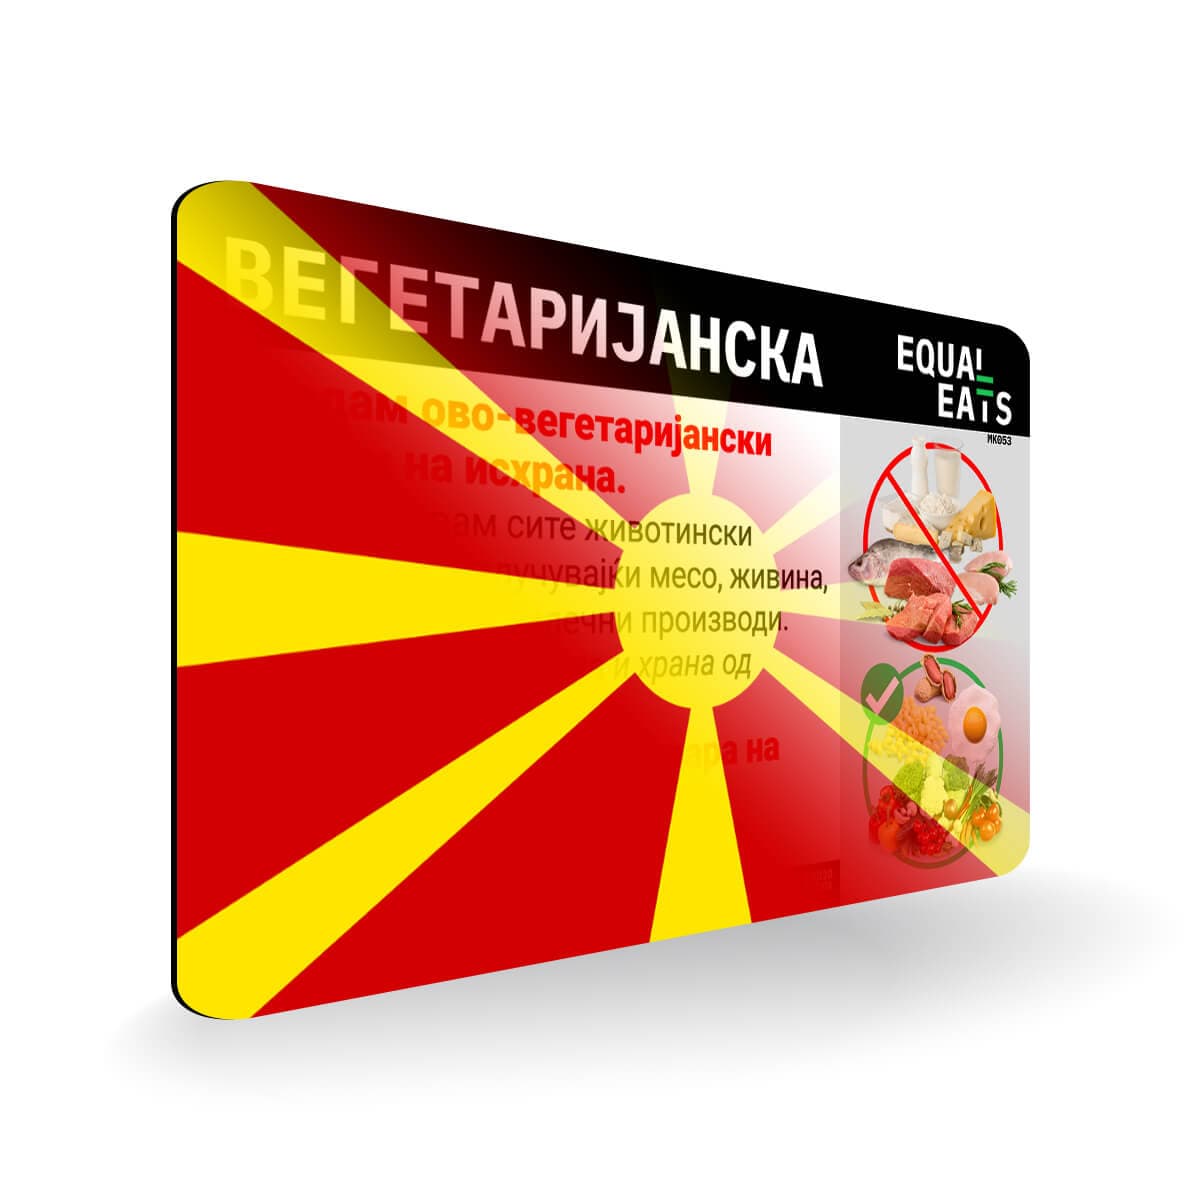 Ovo Vegetarian in Macedonian. Card for Vegetarian in Macedonia